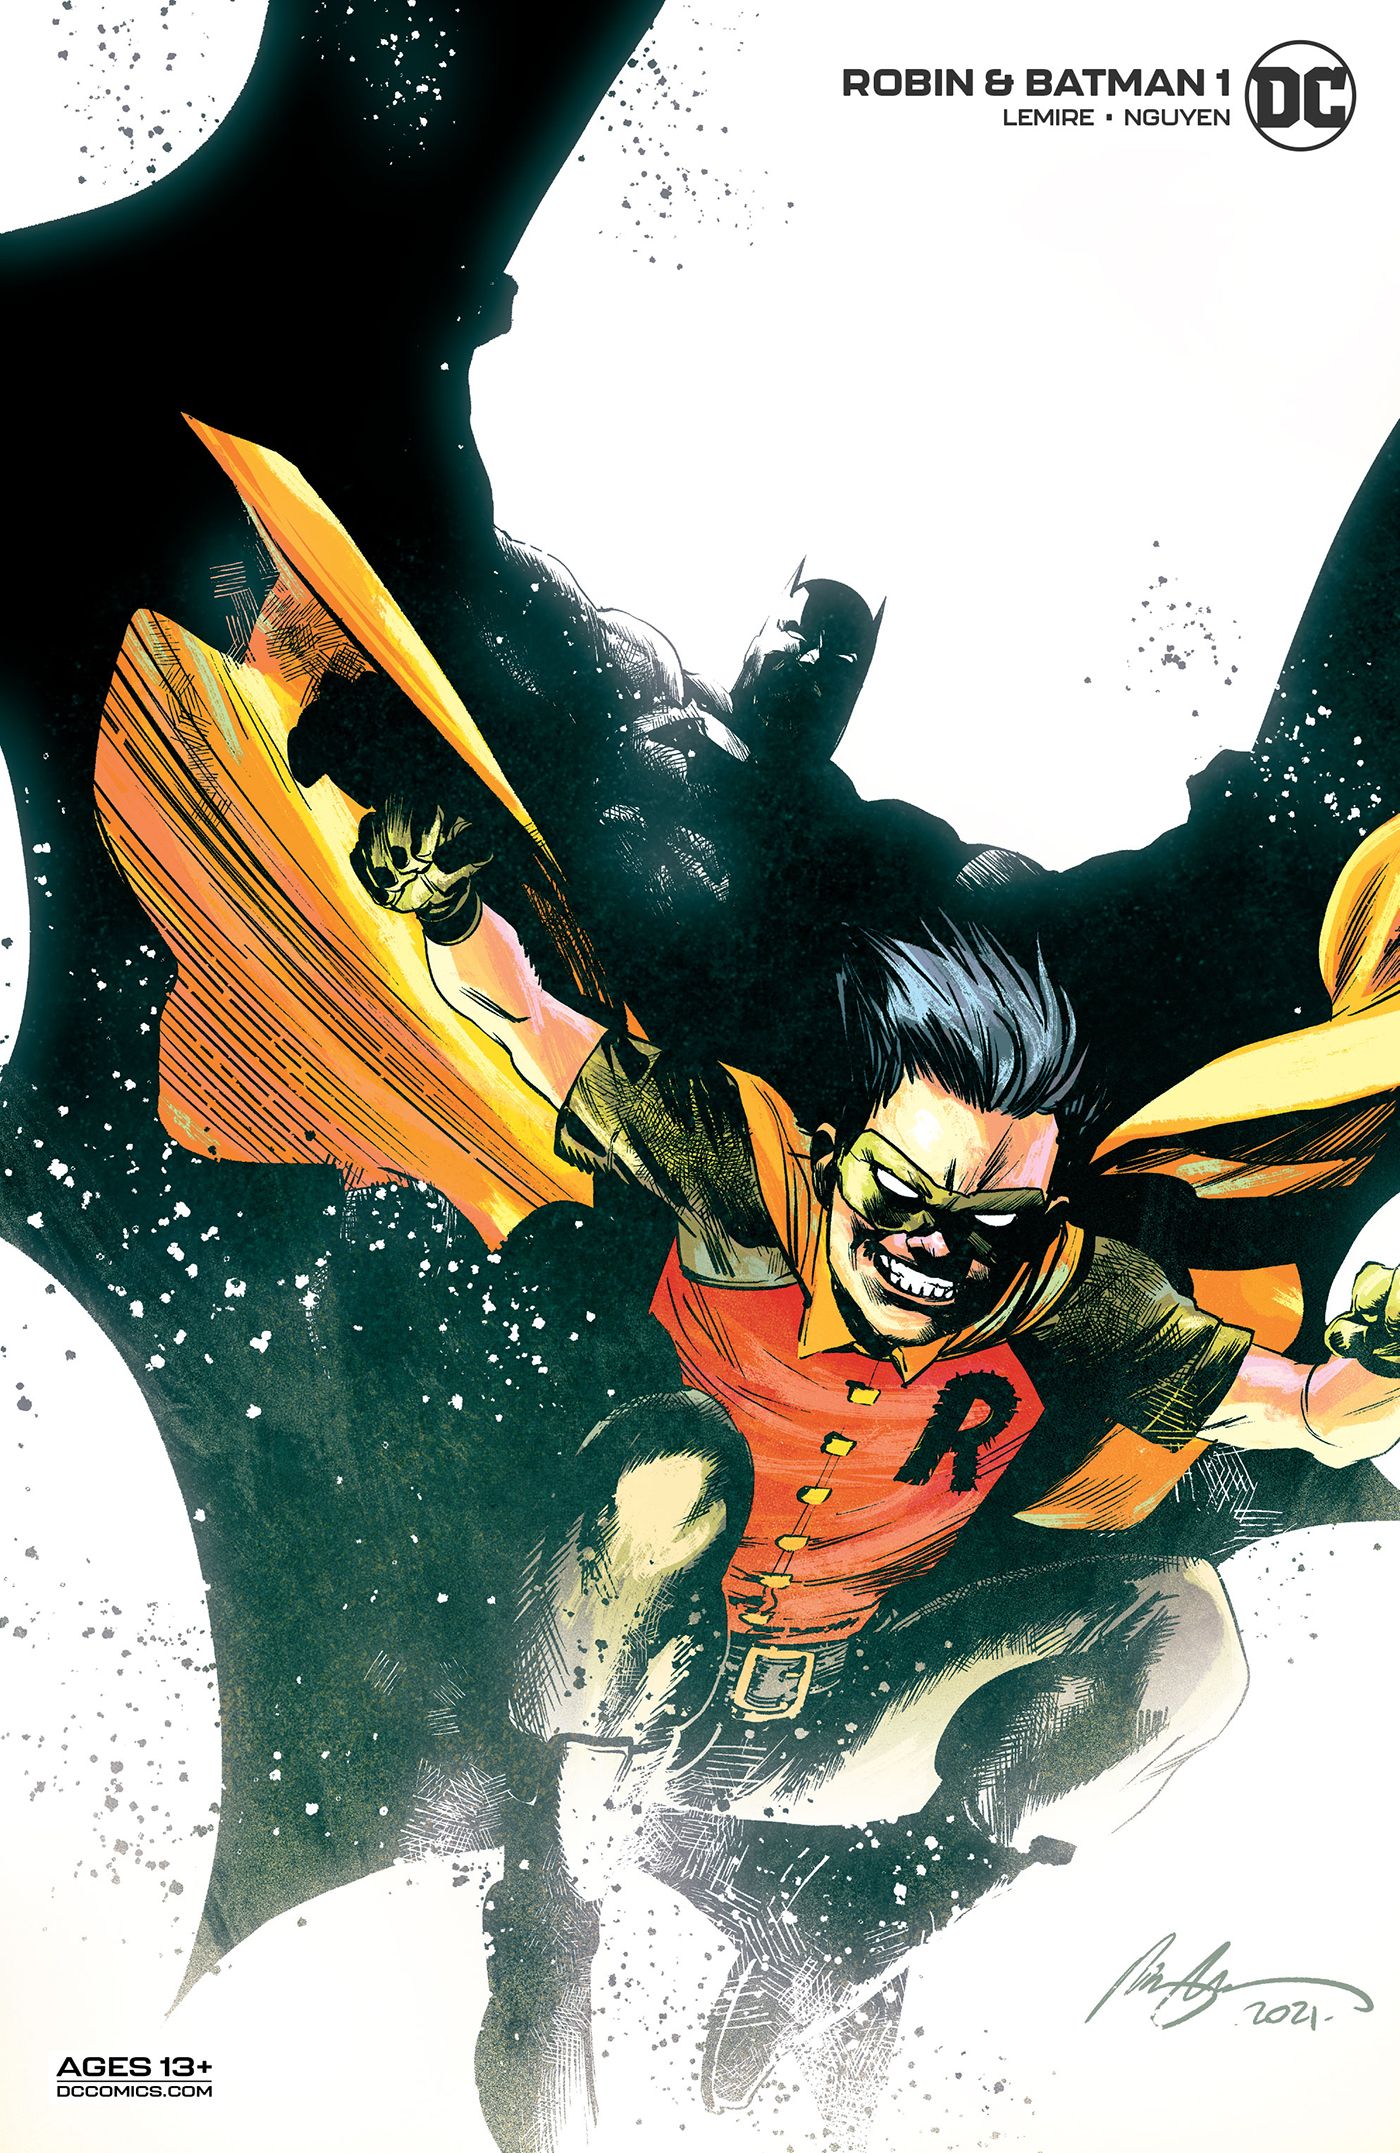 Dick Grayson as Robin in Robin and Batman by Rafael Albuquerque